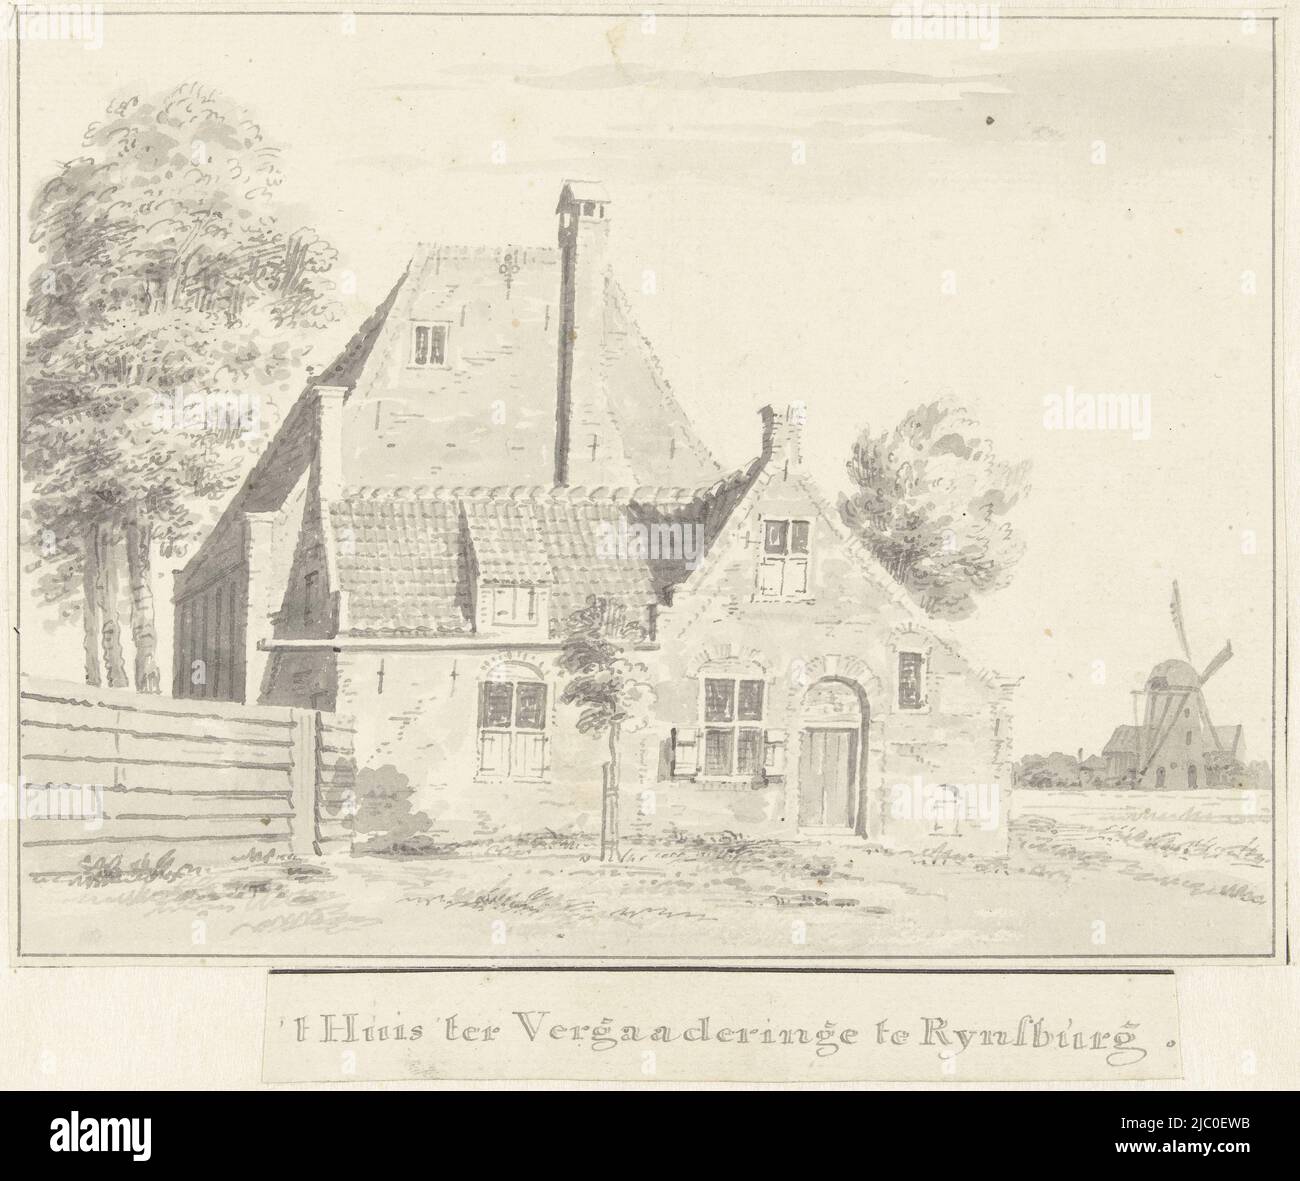 The Collegiants' meeting house in Rijnsburg, draughtsman: Cornelis Pronk, 1701 - 1759, paper, pen, brush, h 135 mm × w 176 mm Stock Photo